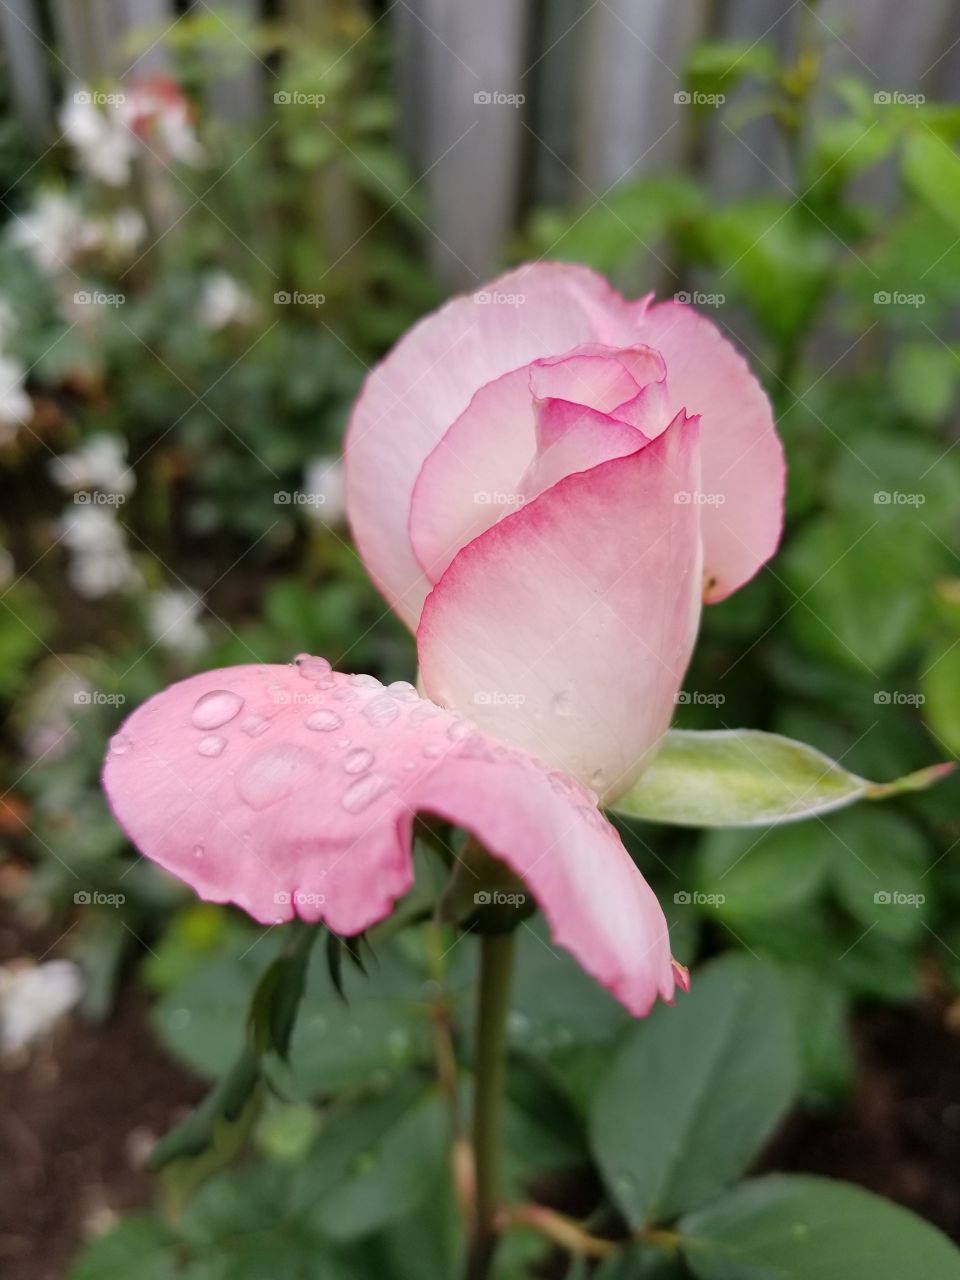 Rain drop on rose